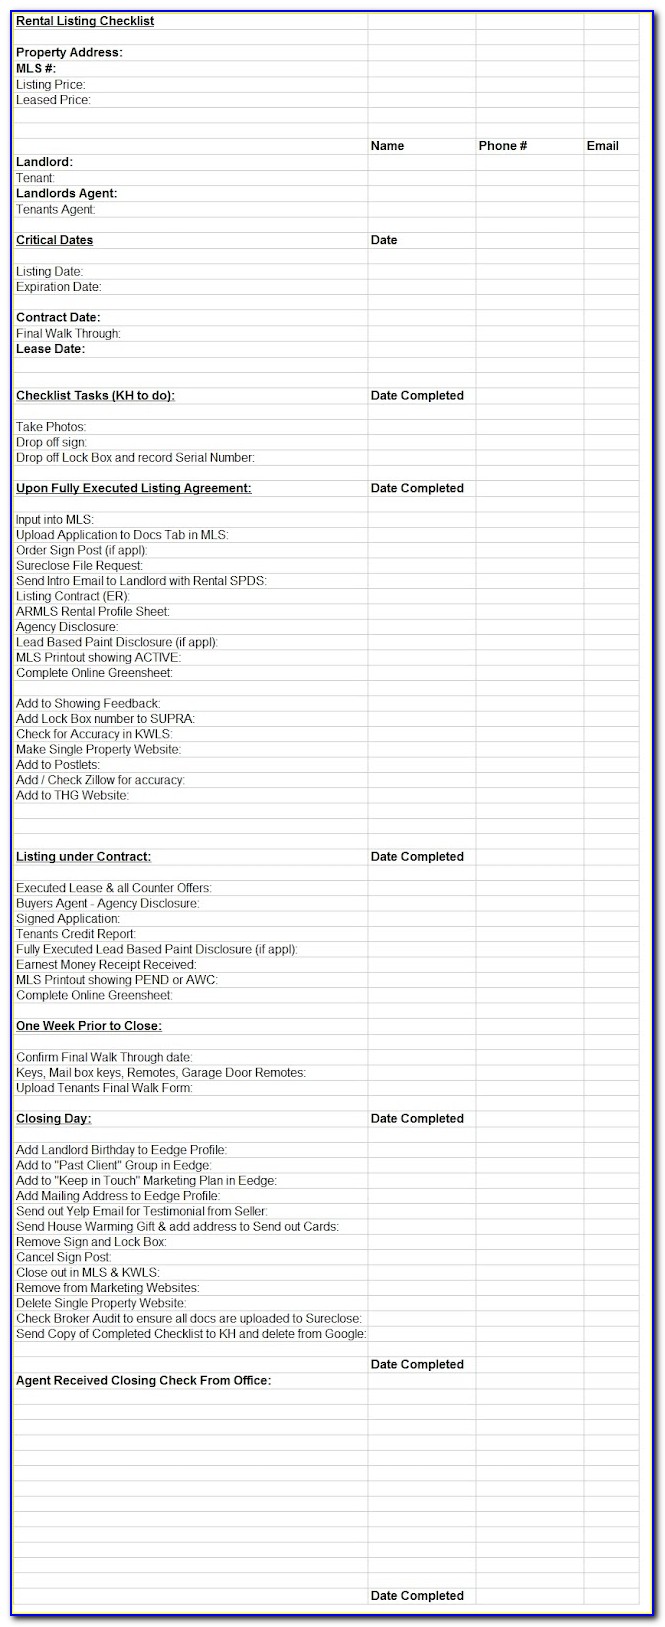 Rental House Checklist Template